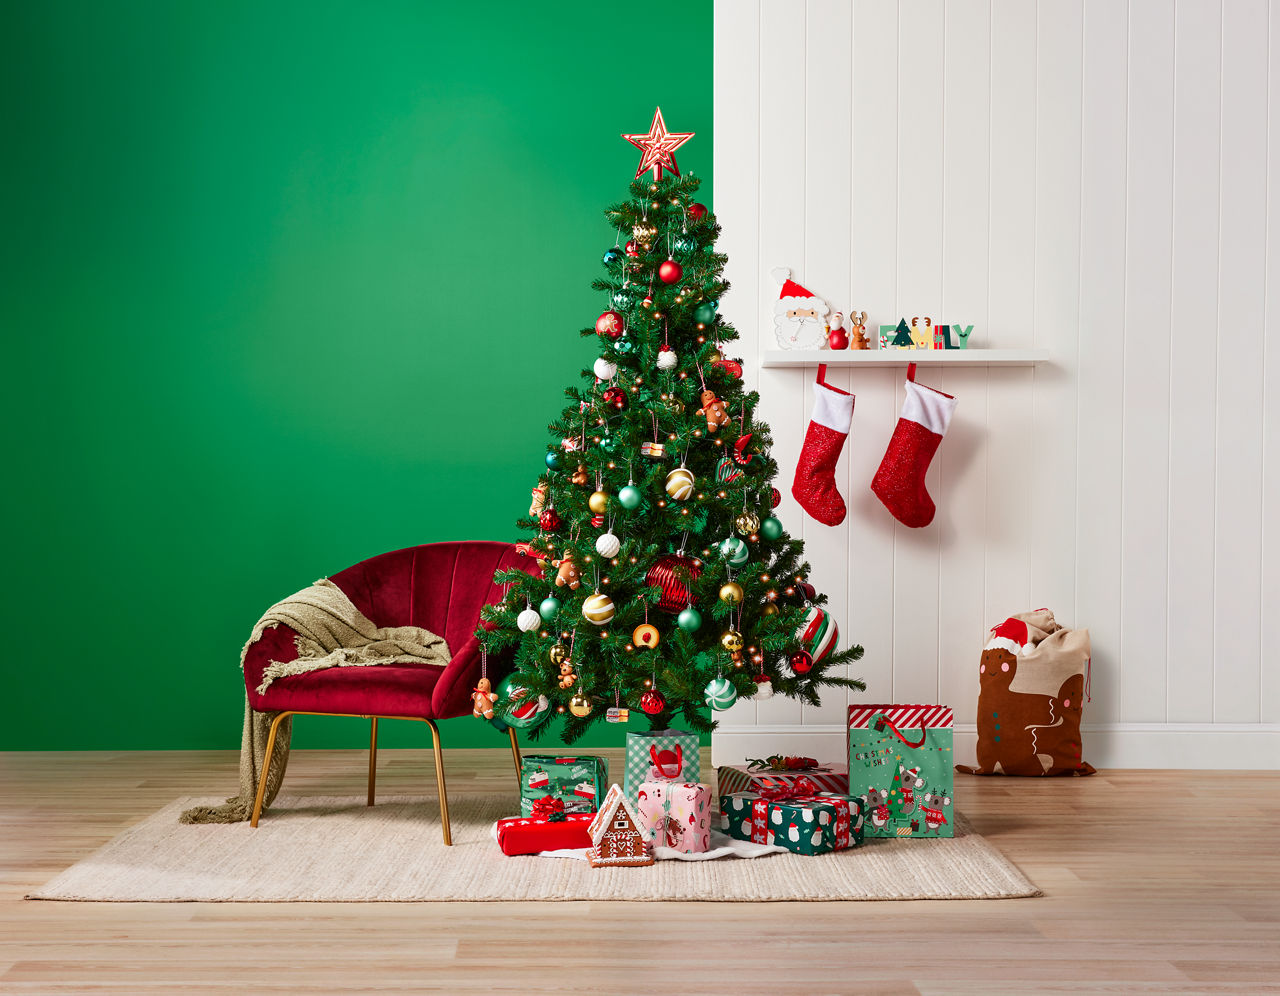 Big savings and festive delights await as BIG W unwraps its new Christmas range.